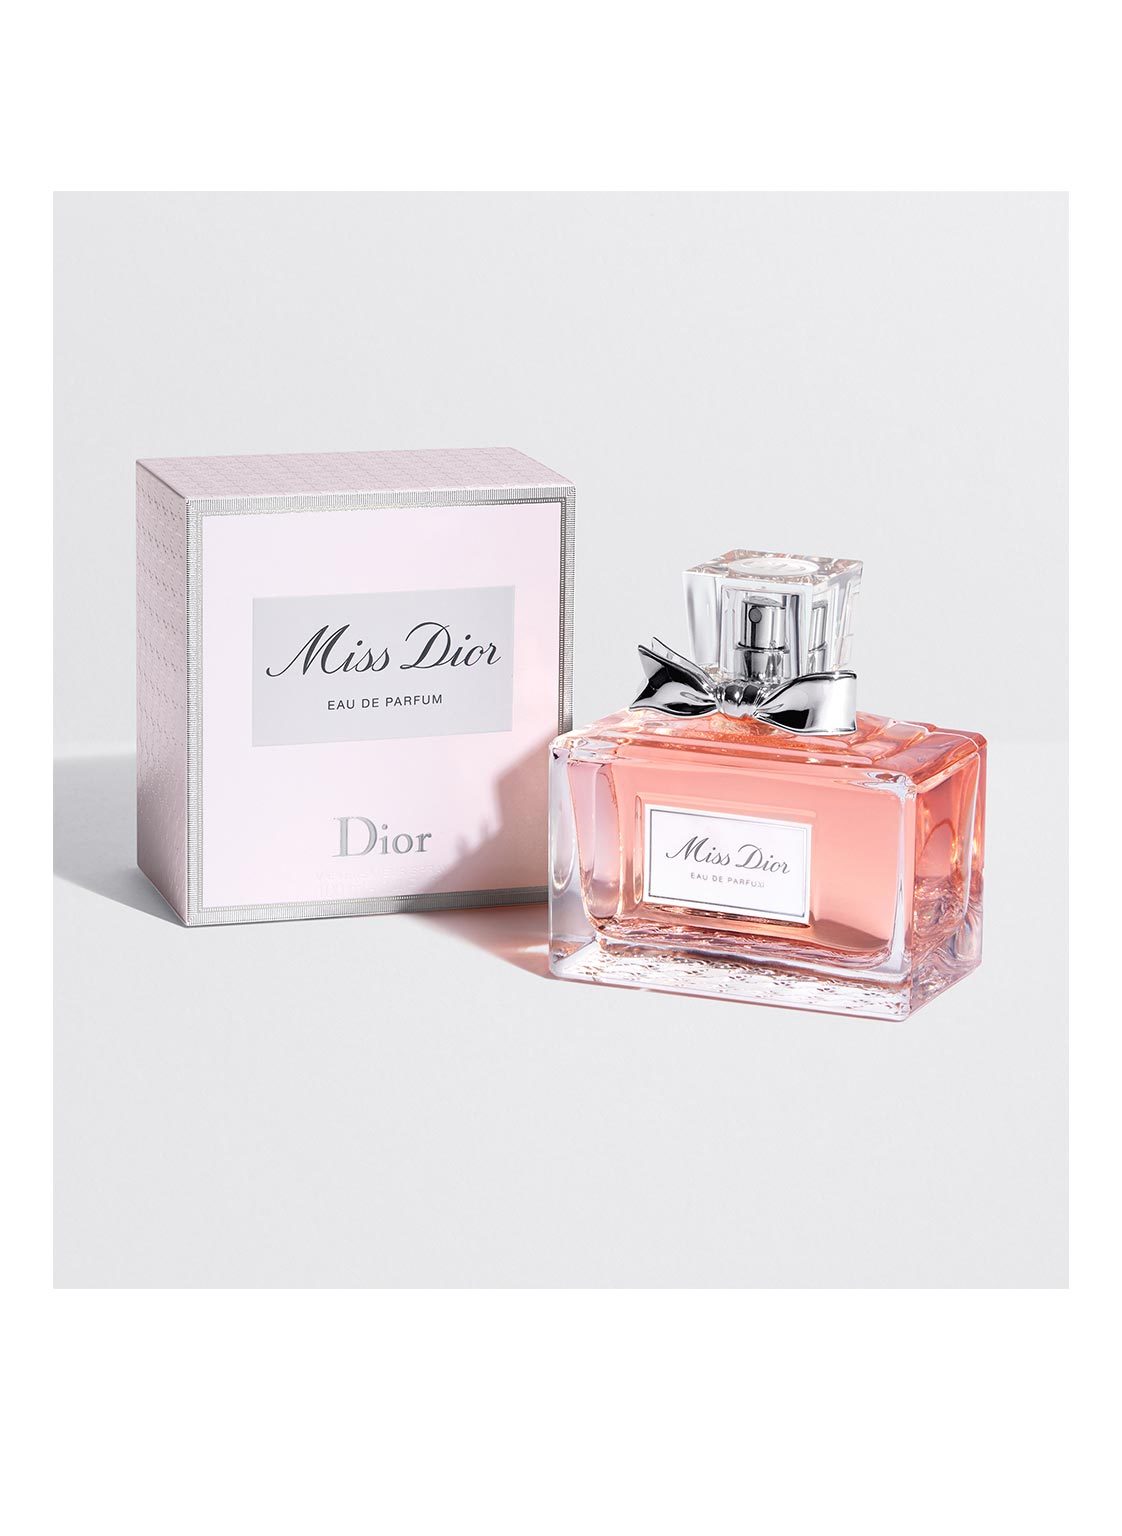 Nước hoa Miss Dior Eau De Parfum chính hãng